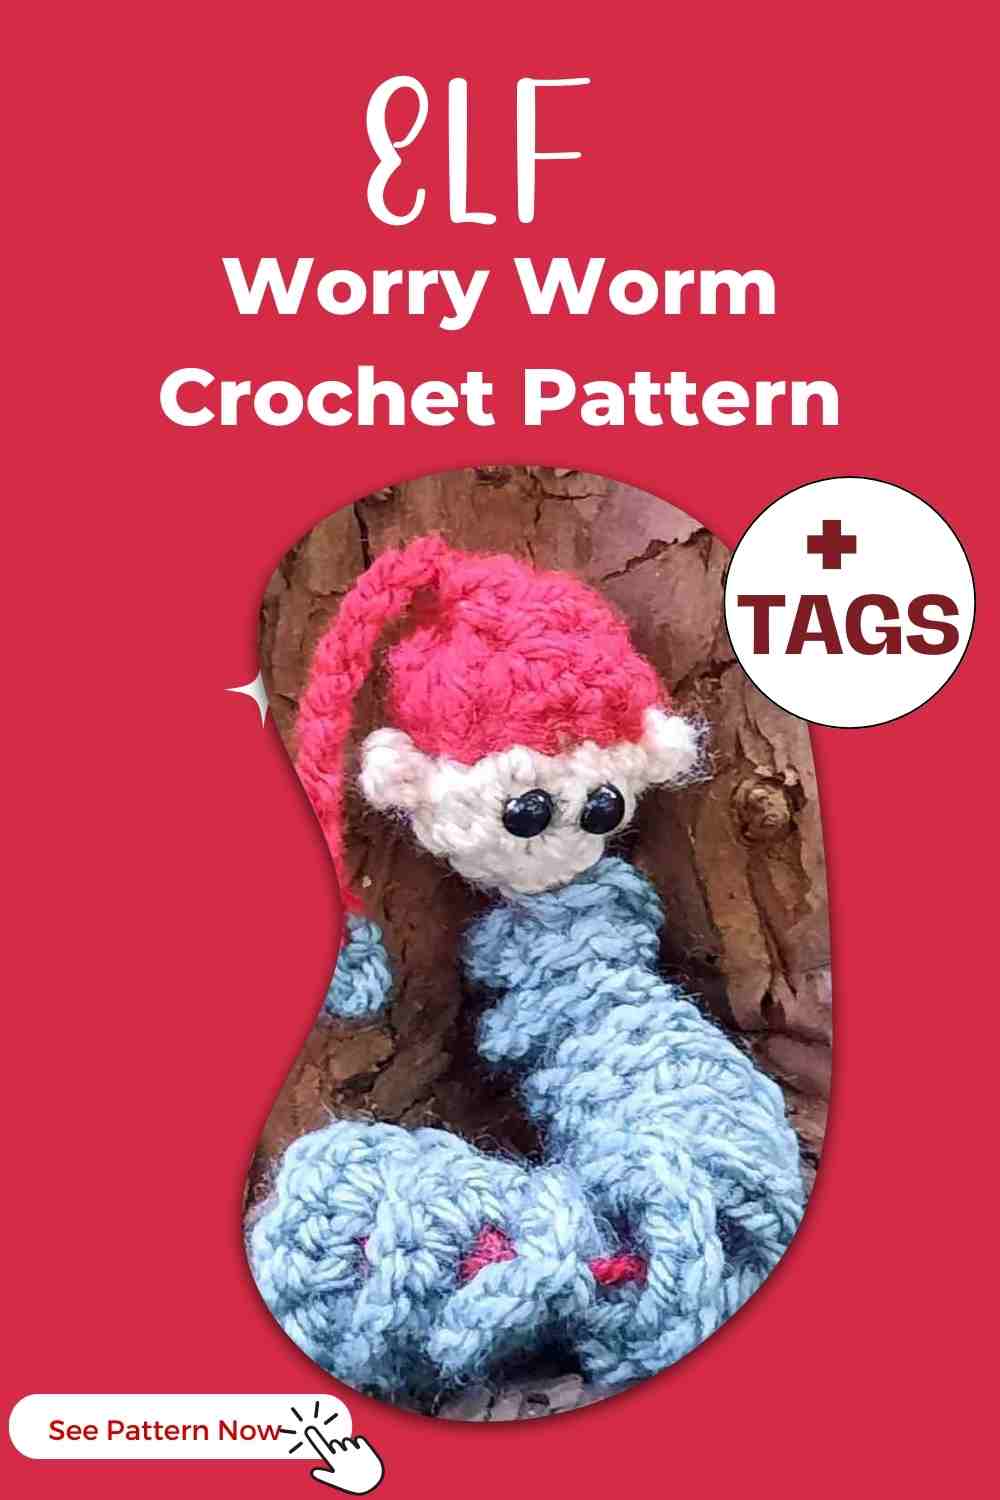 Elf Worry Worm Crochet Patterns